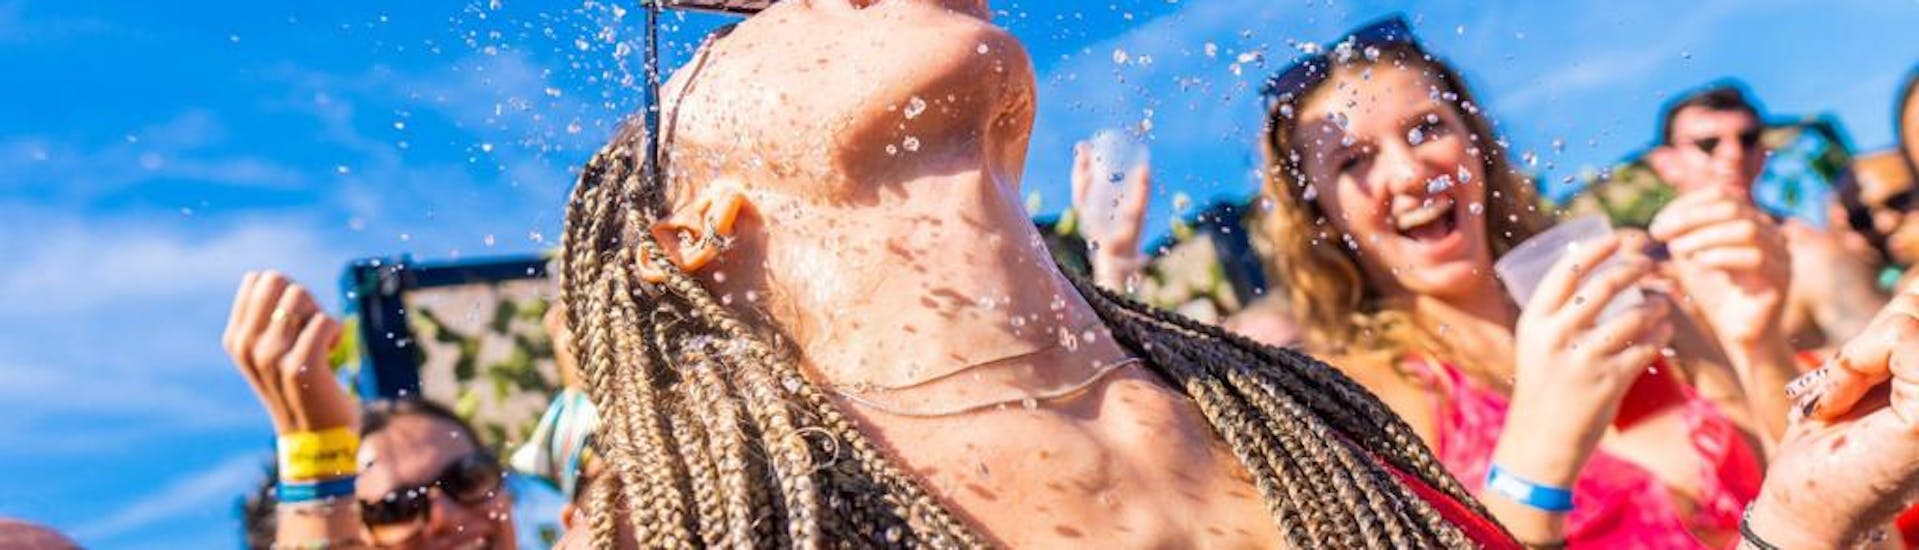 Balade en bateau festive à Ibiza depuis Playa d'en Bossa avec DJ.